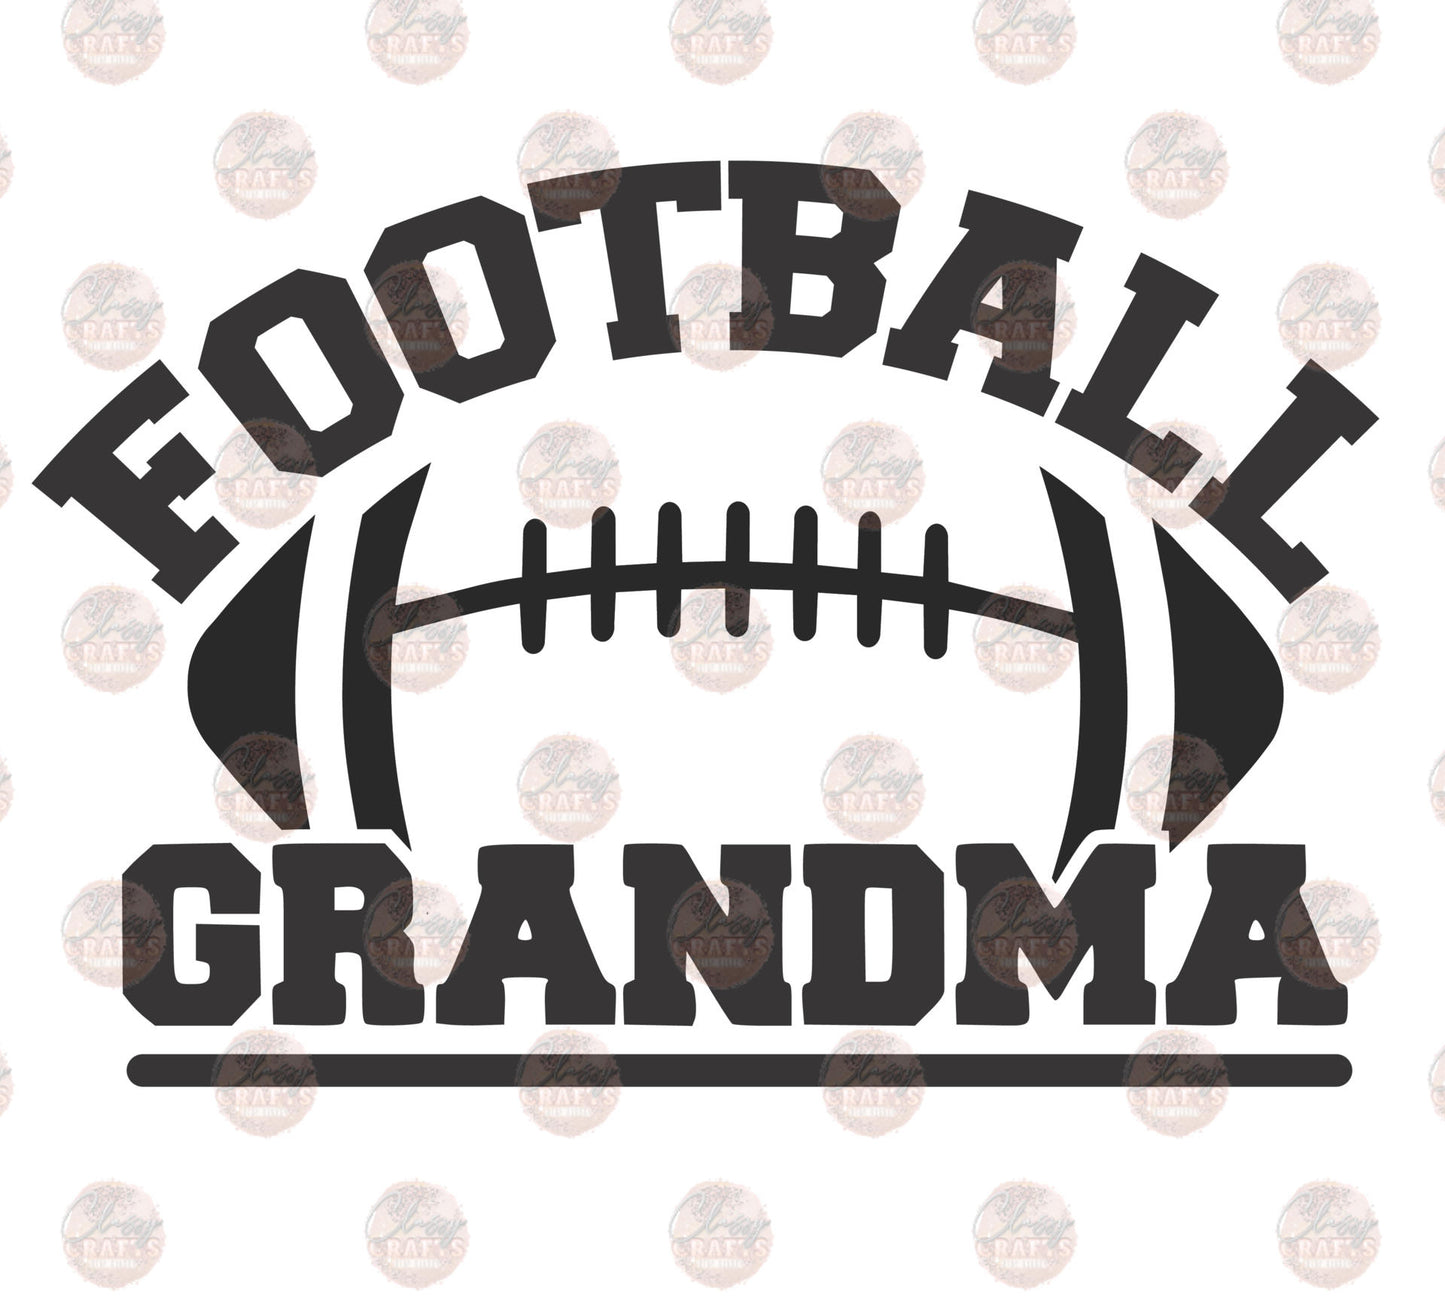 Football Grandma Transfer